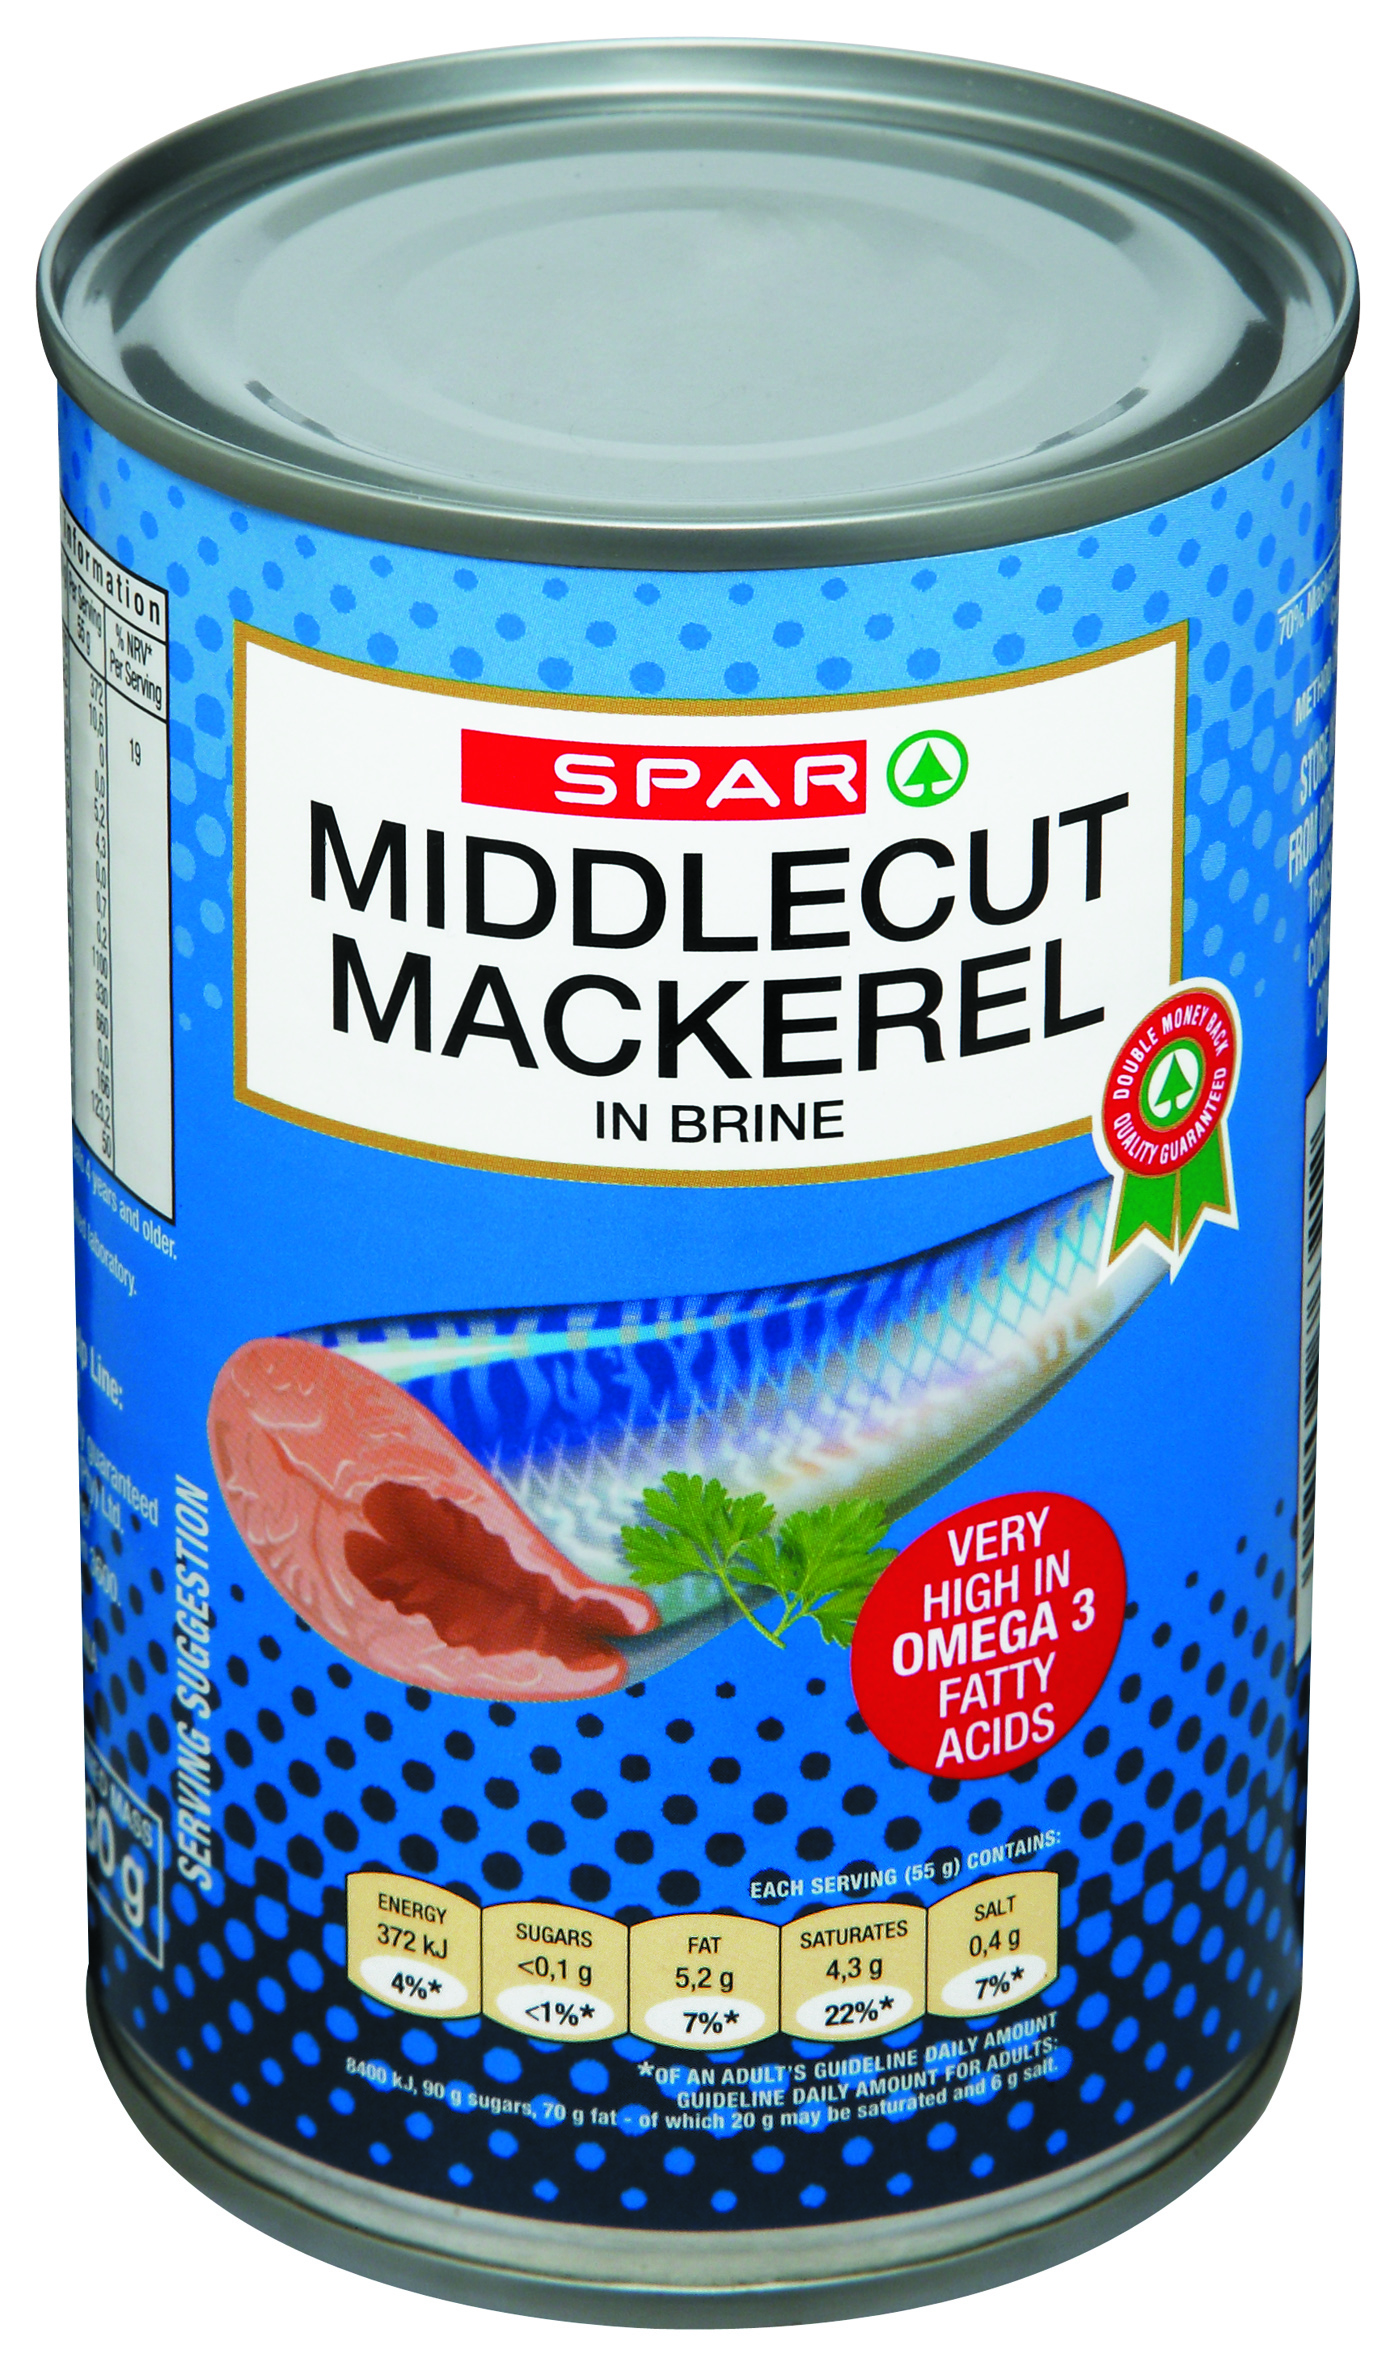 middlecut mackerel in brine